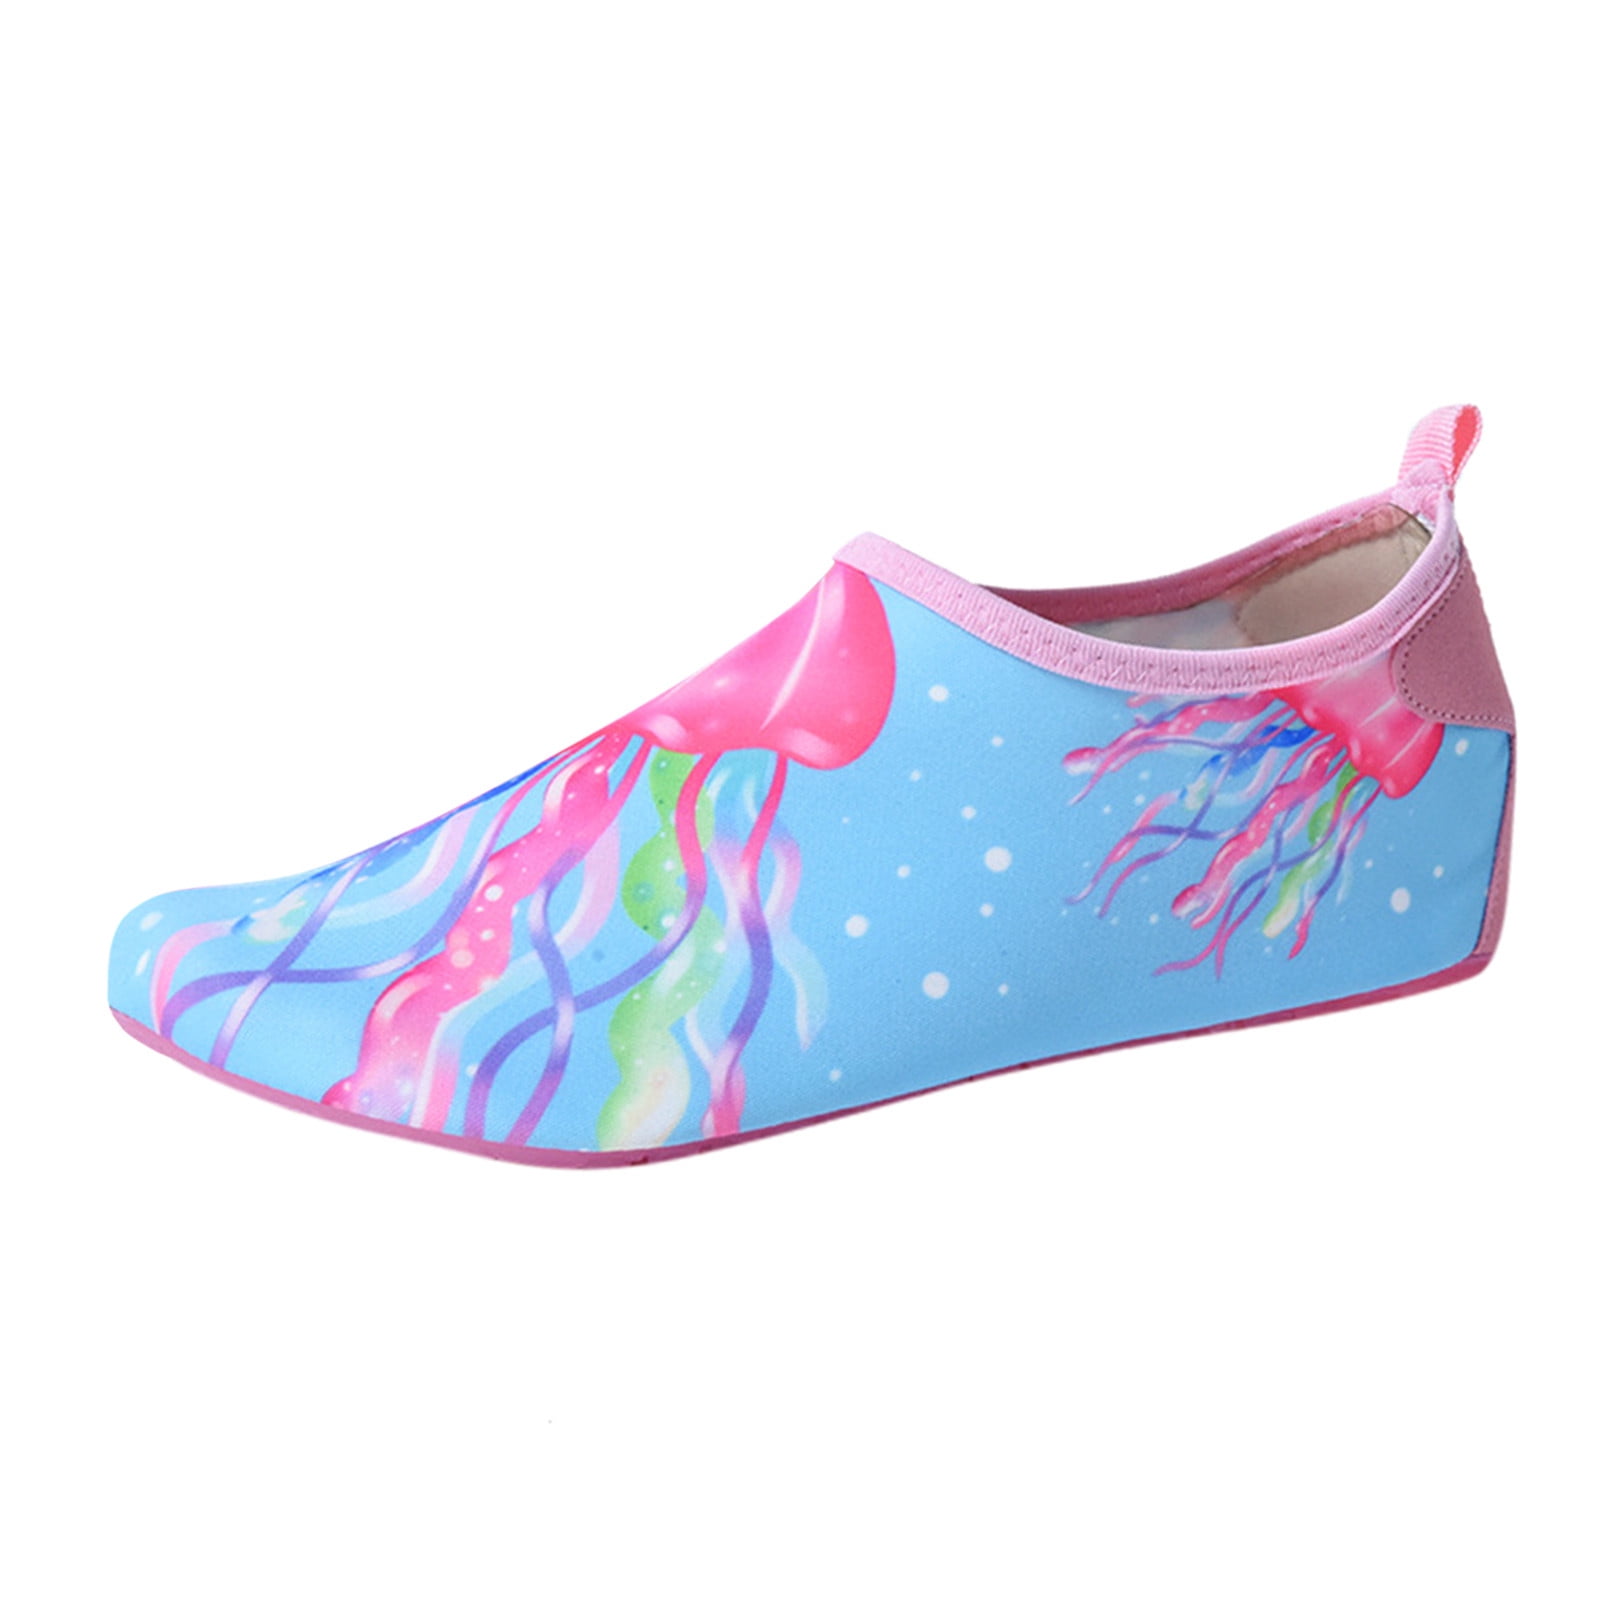 ZMHEGW Kids Toddler Boys Girls Water Shoes Barefoot Quick-Dry Aqua ...